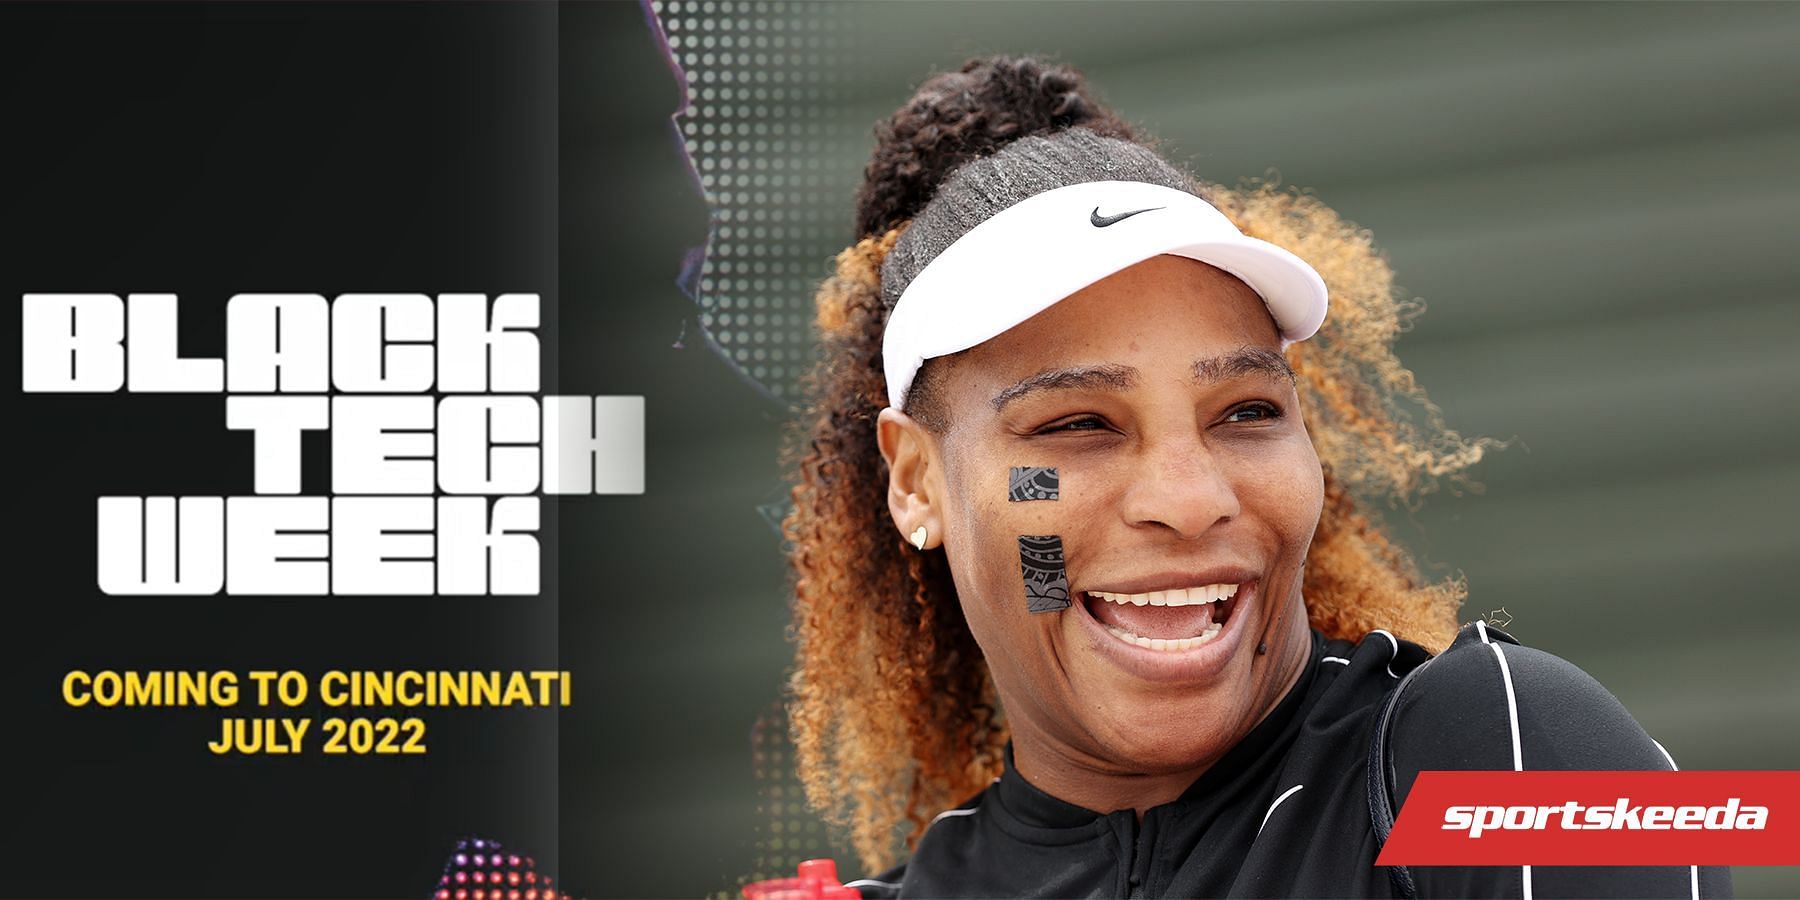 Serena Williams will be the keynote speaker at Black Tech Week.